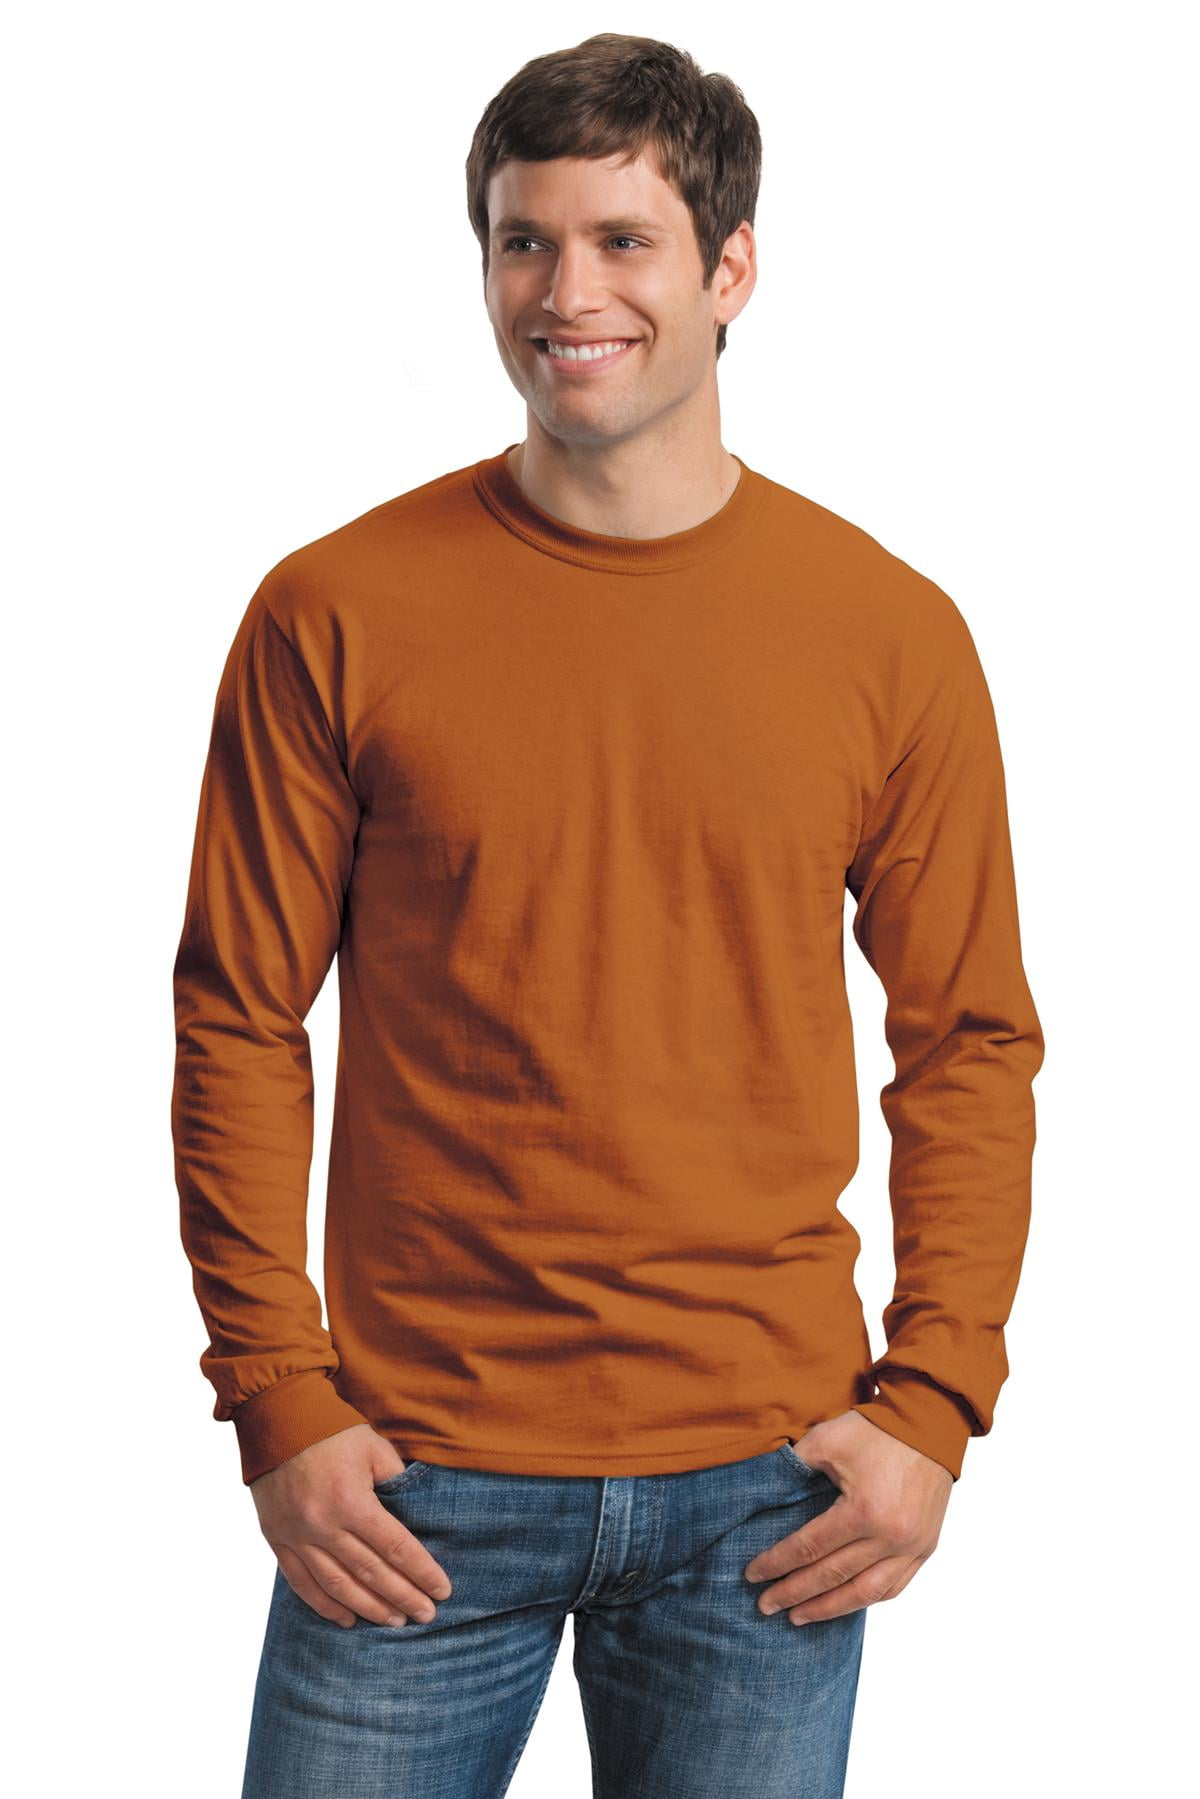 Gildan Men's Ultra Cotton Long Sleeve T-Shirt Multipack Style G2400